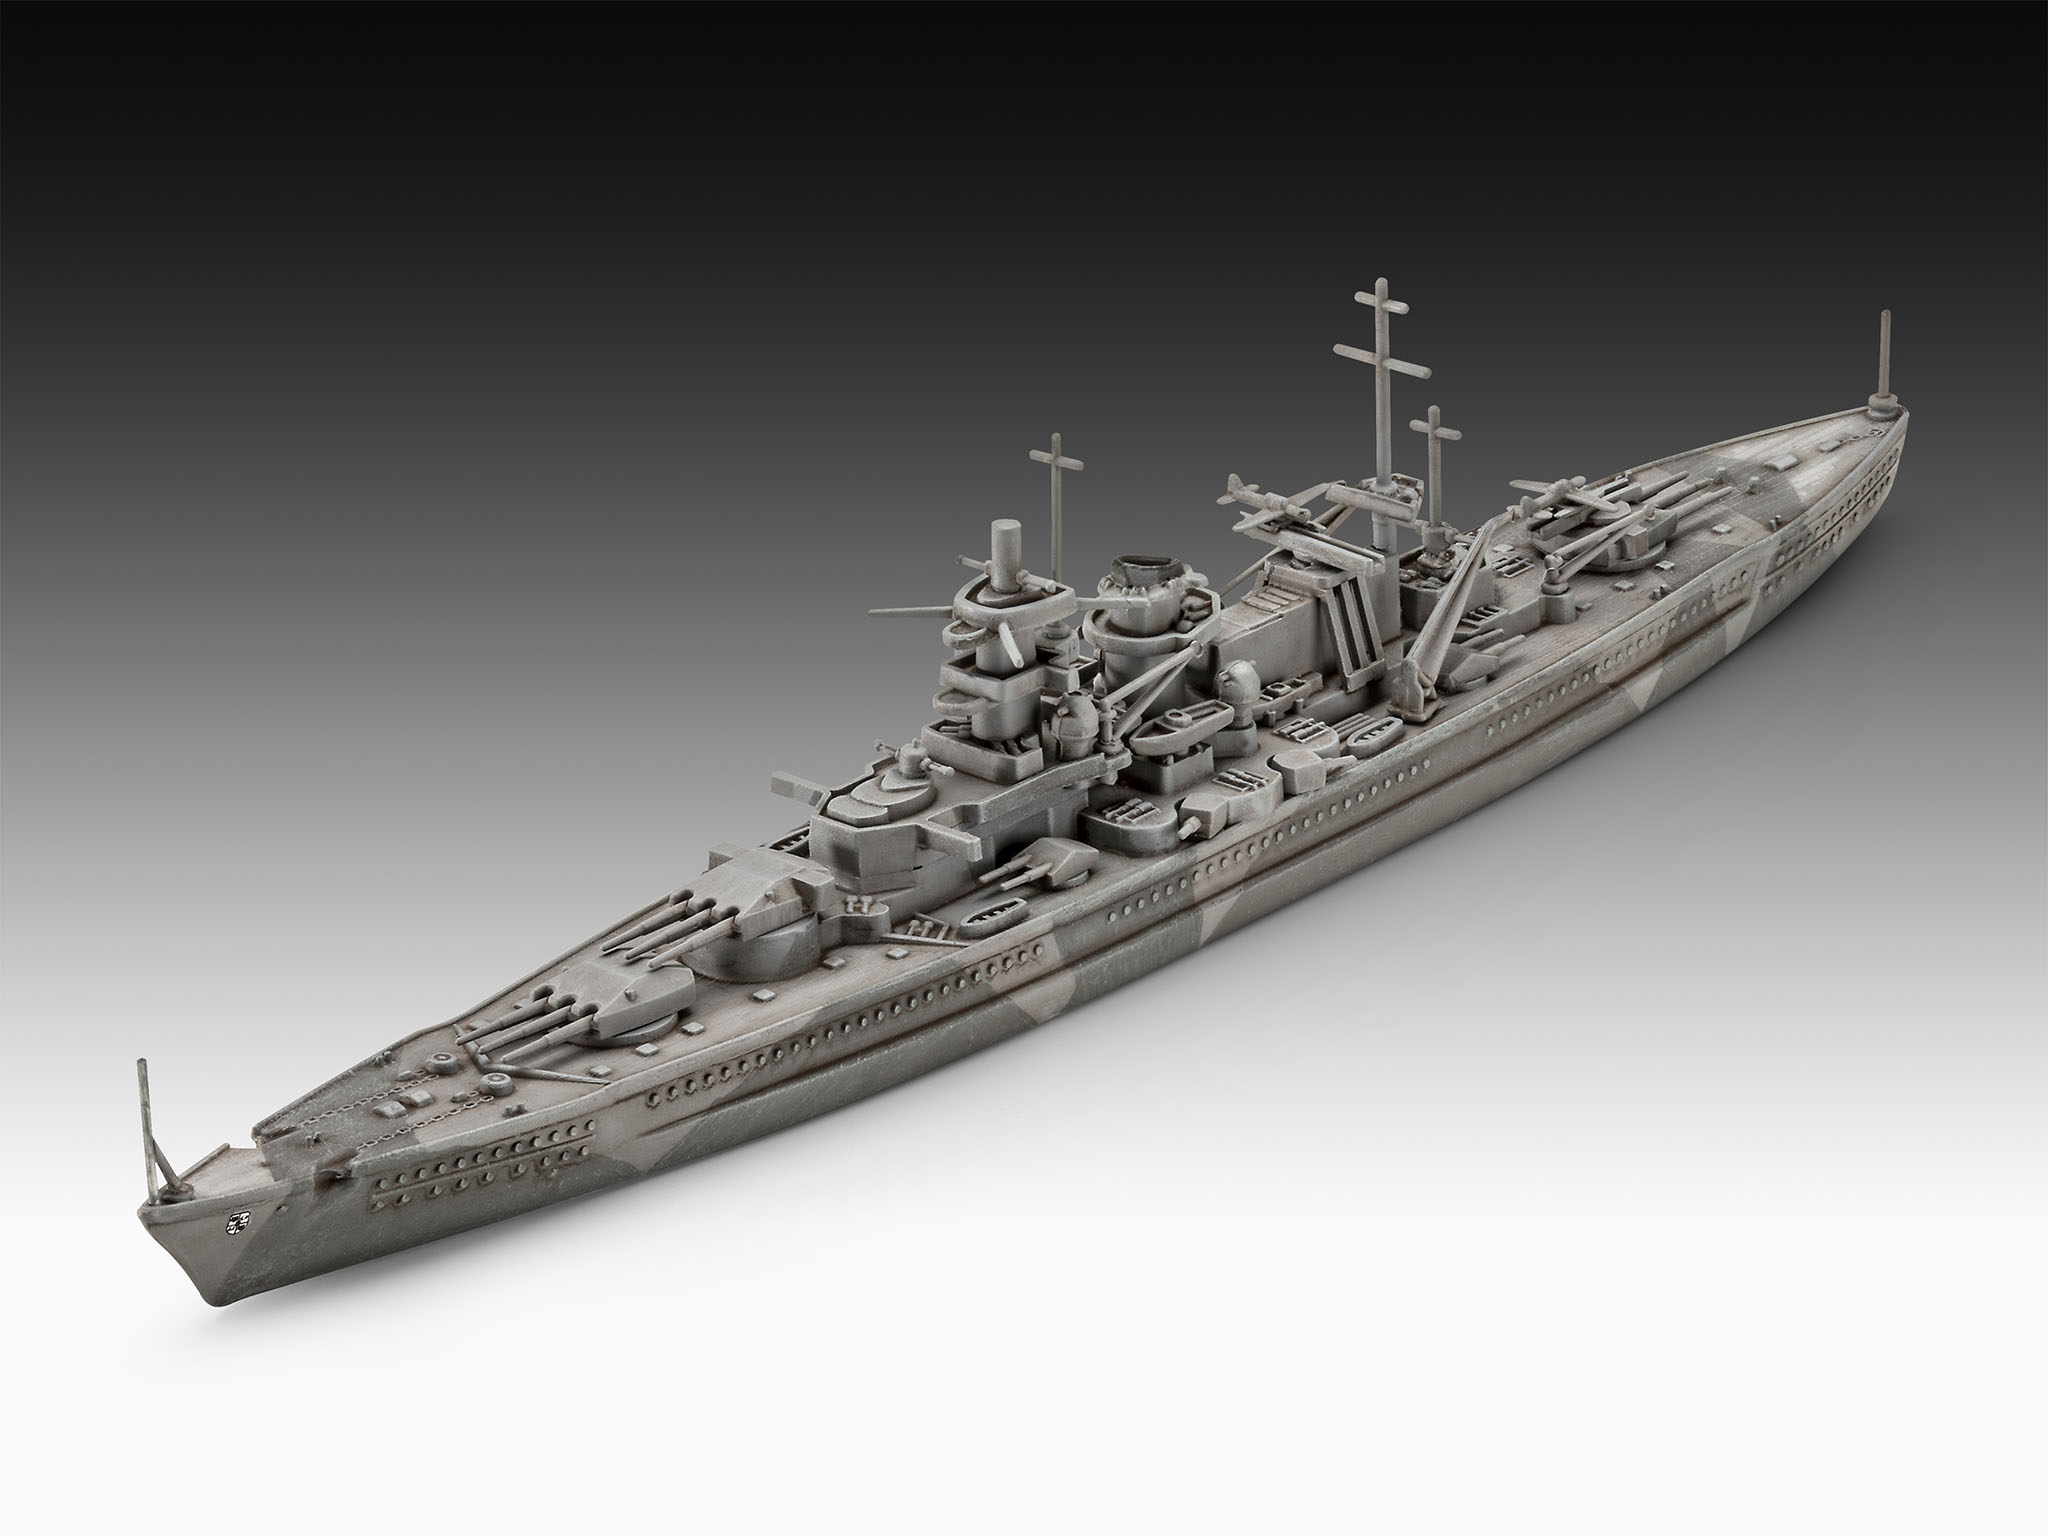 Gneisenau - Battleship Gneisenau